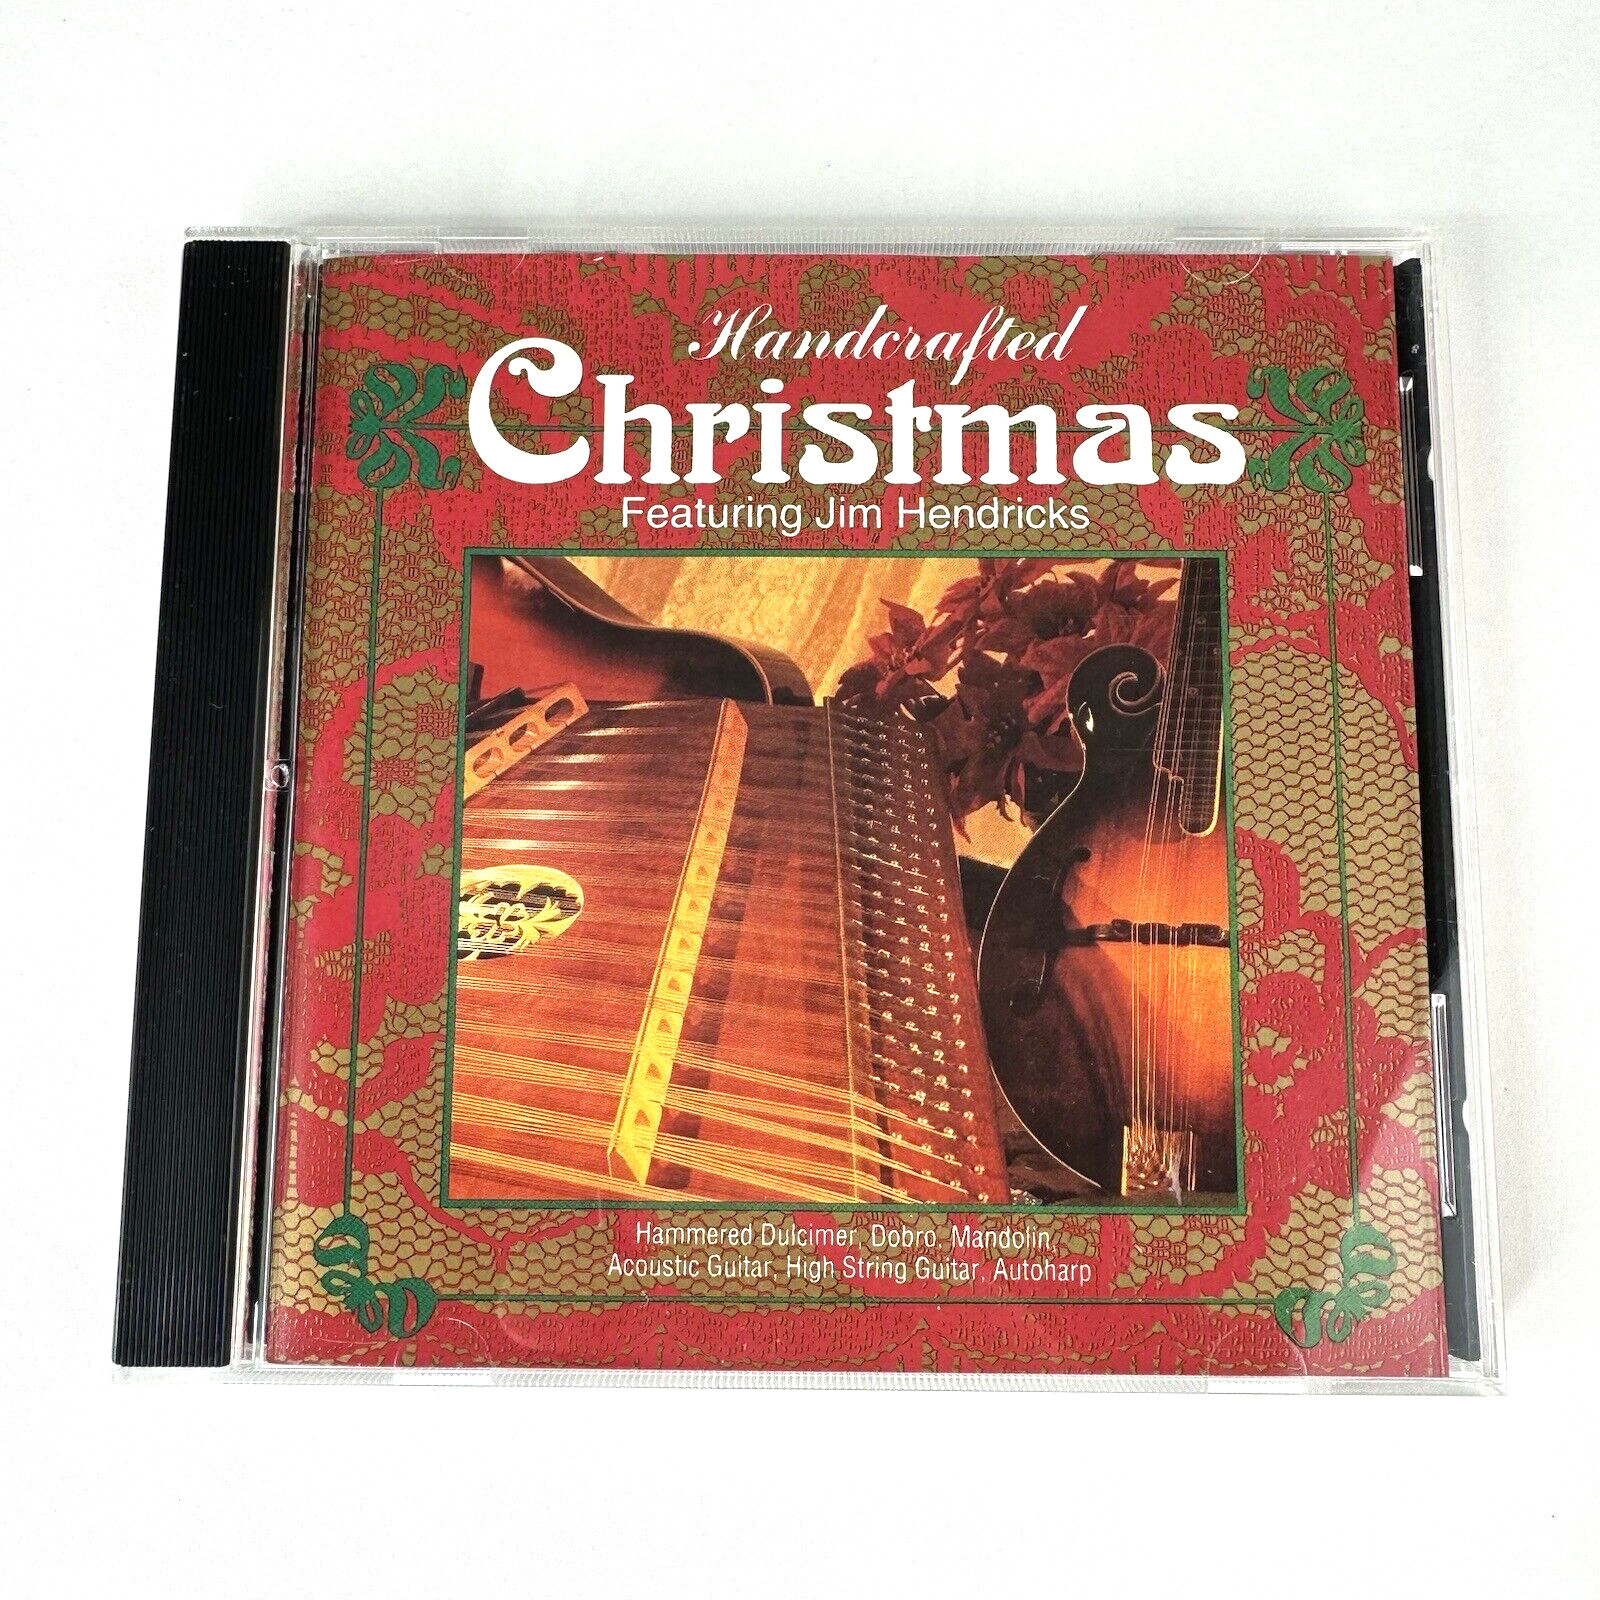 Jim Hendricks - Handcrafted Christmas - Audio CD 1992 Benson Records